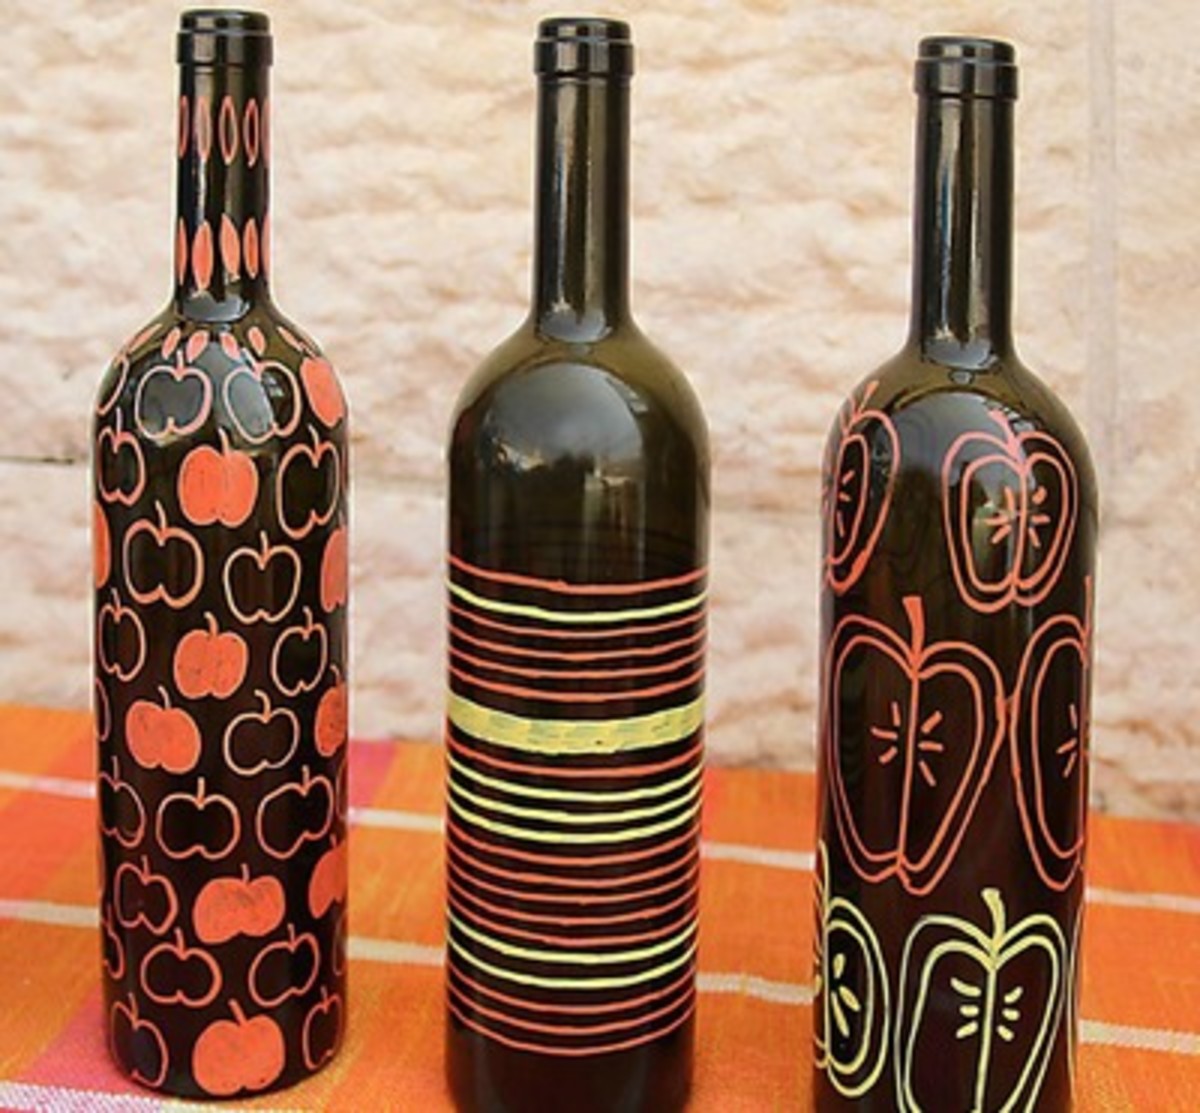 https://images.saymedia-content.com/.image/t_share/MTc1MDE2MDQ0ODYzMTcwMzQ3/diy-super-creative-wine-bottle-craft-ideas.jpg